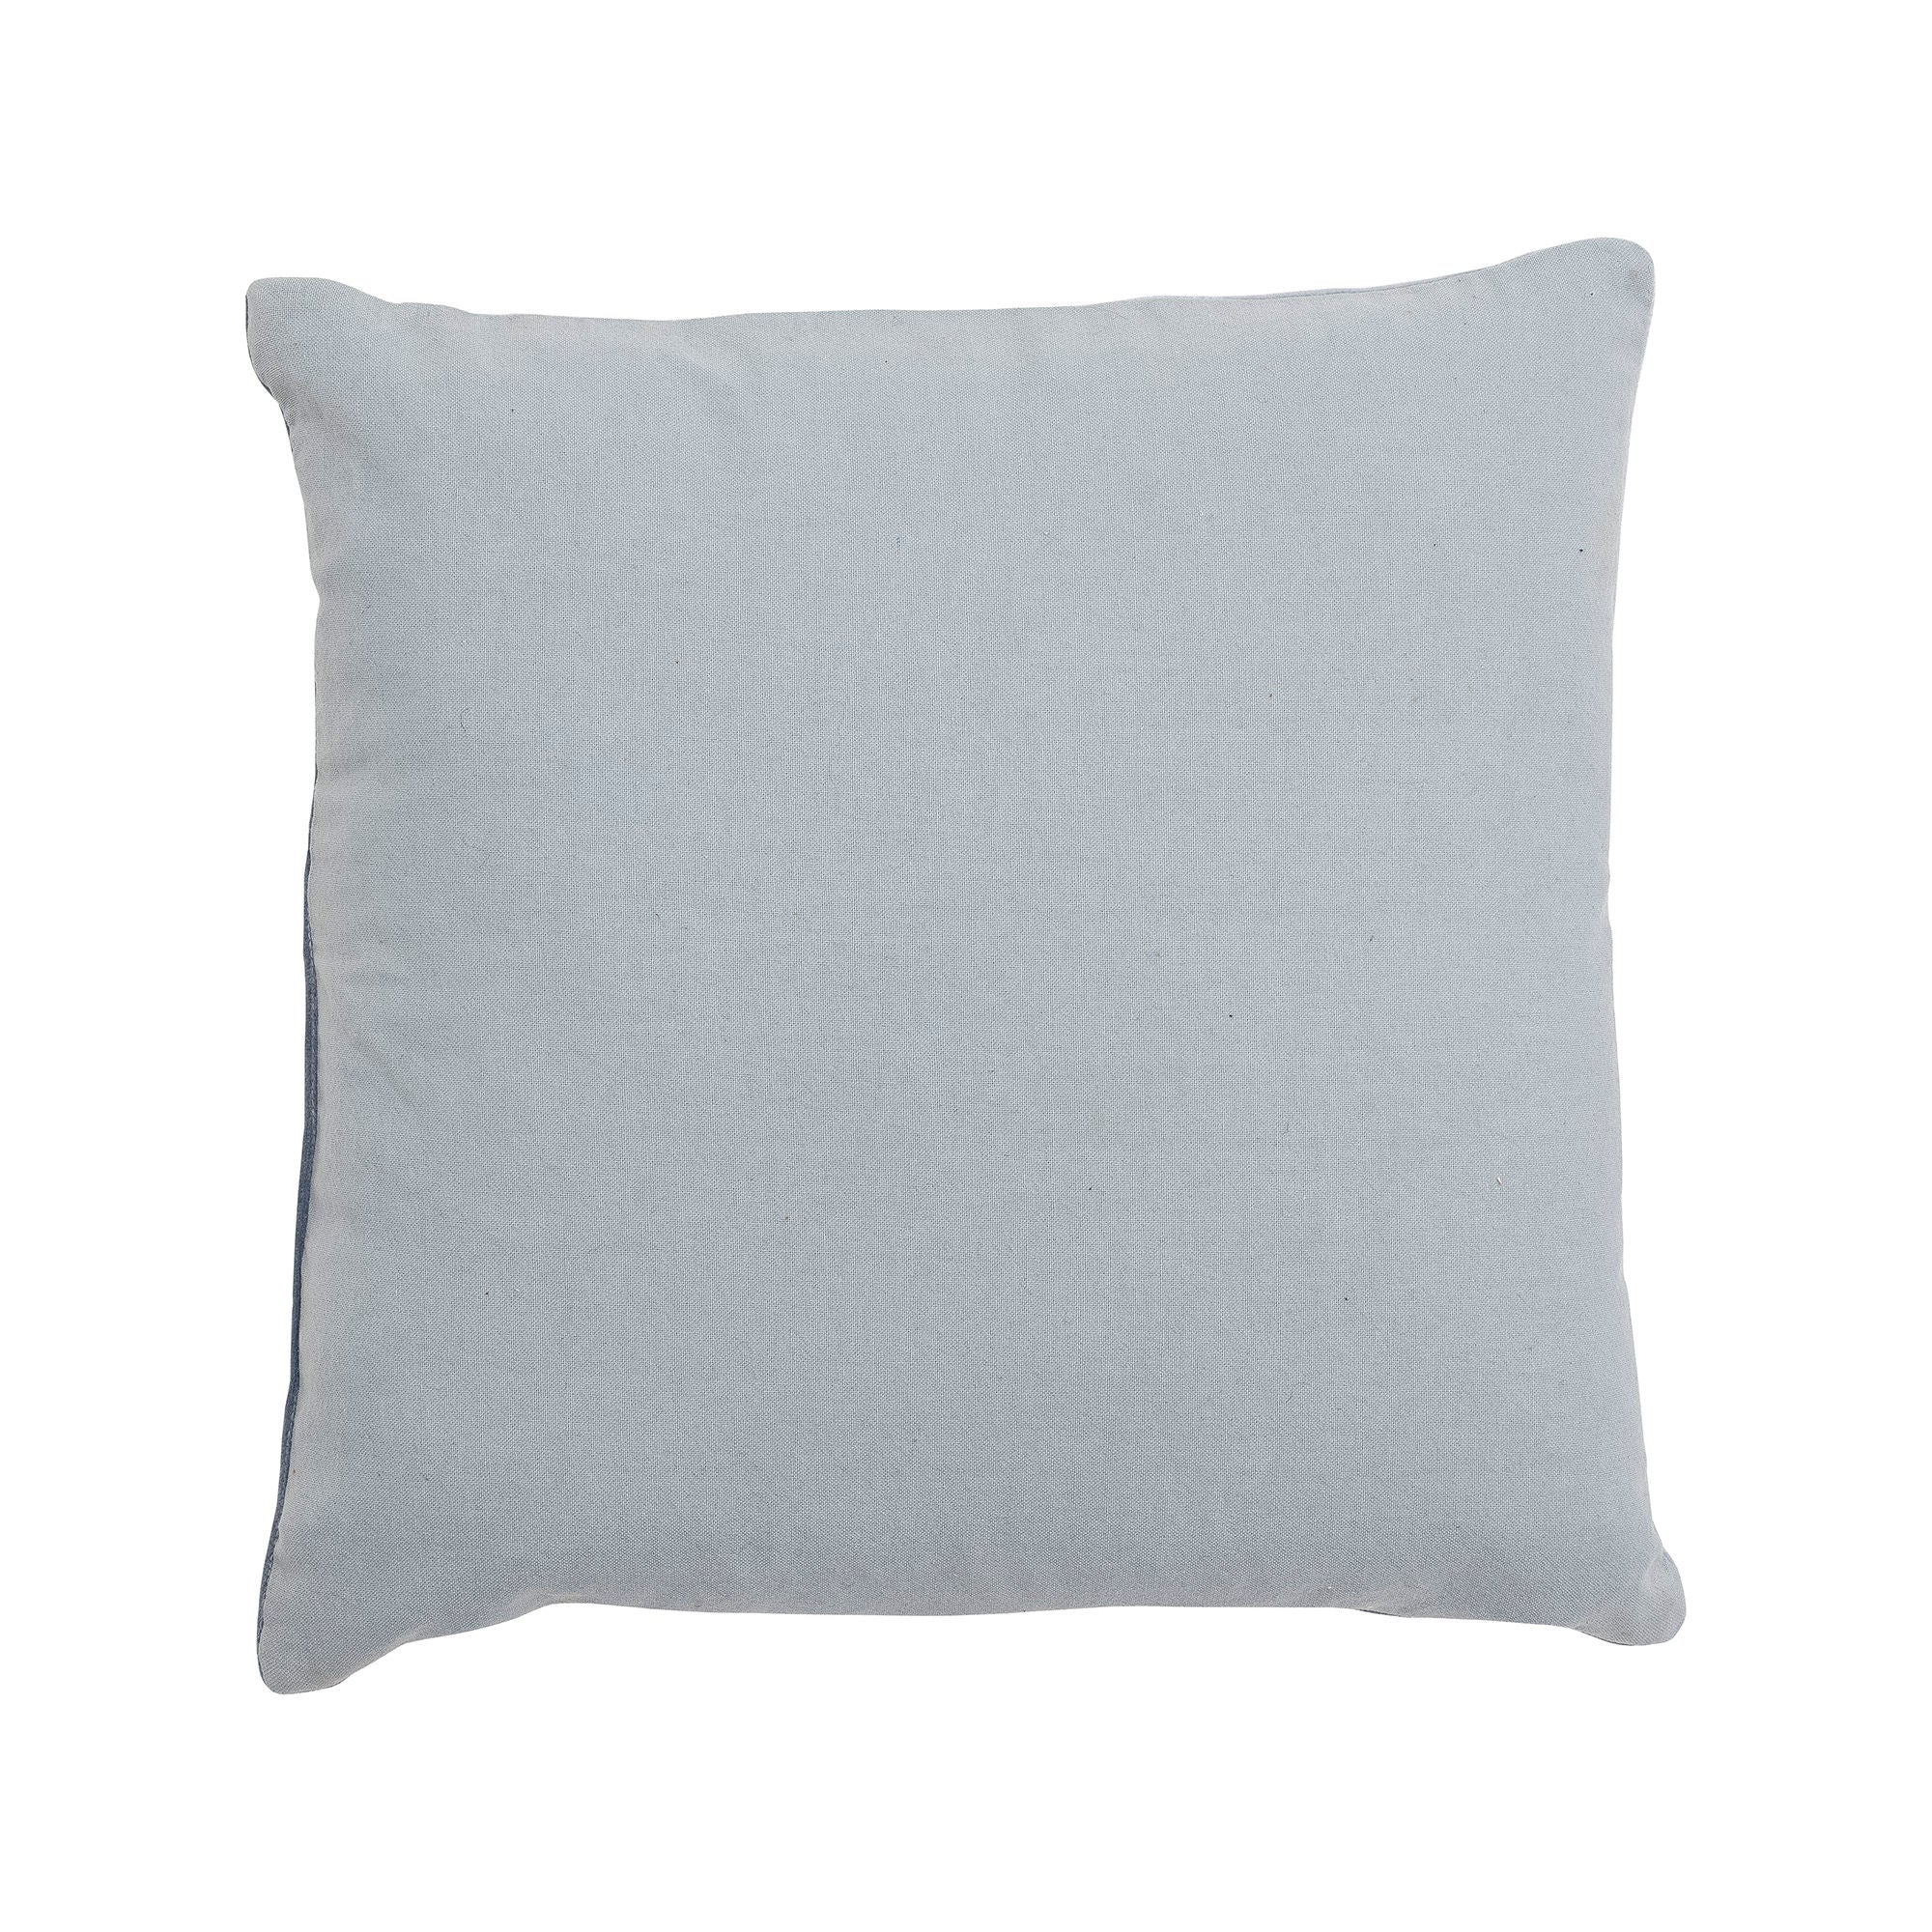 Bloomingville Aban poduszka, niebieska, bawełniana